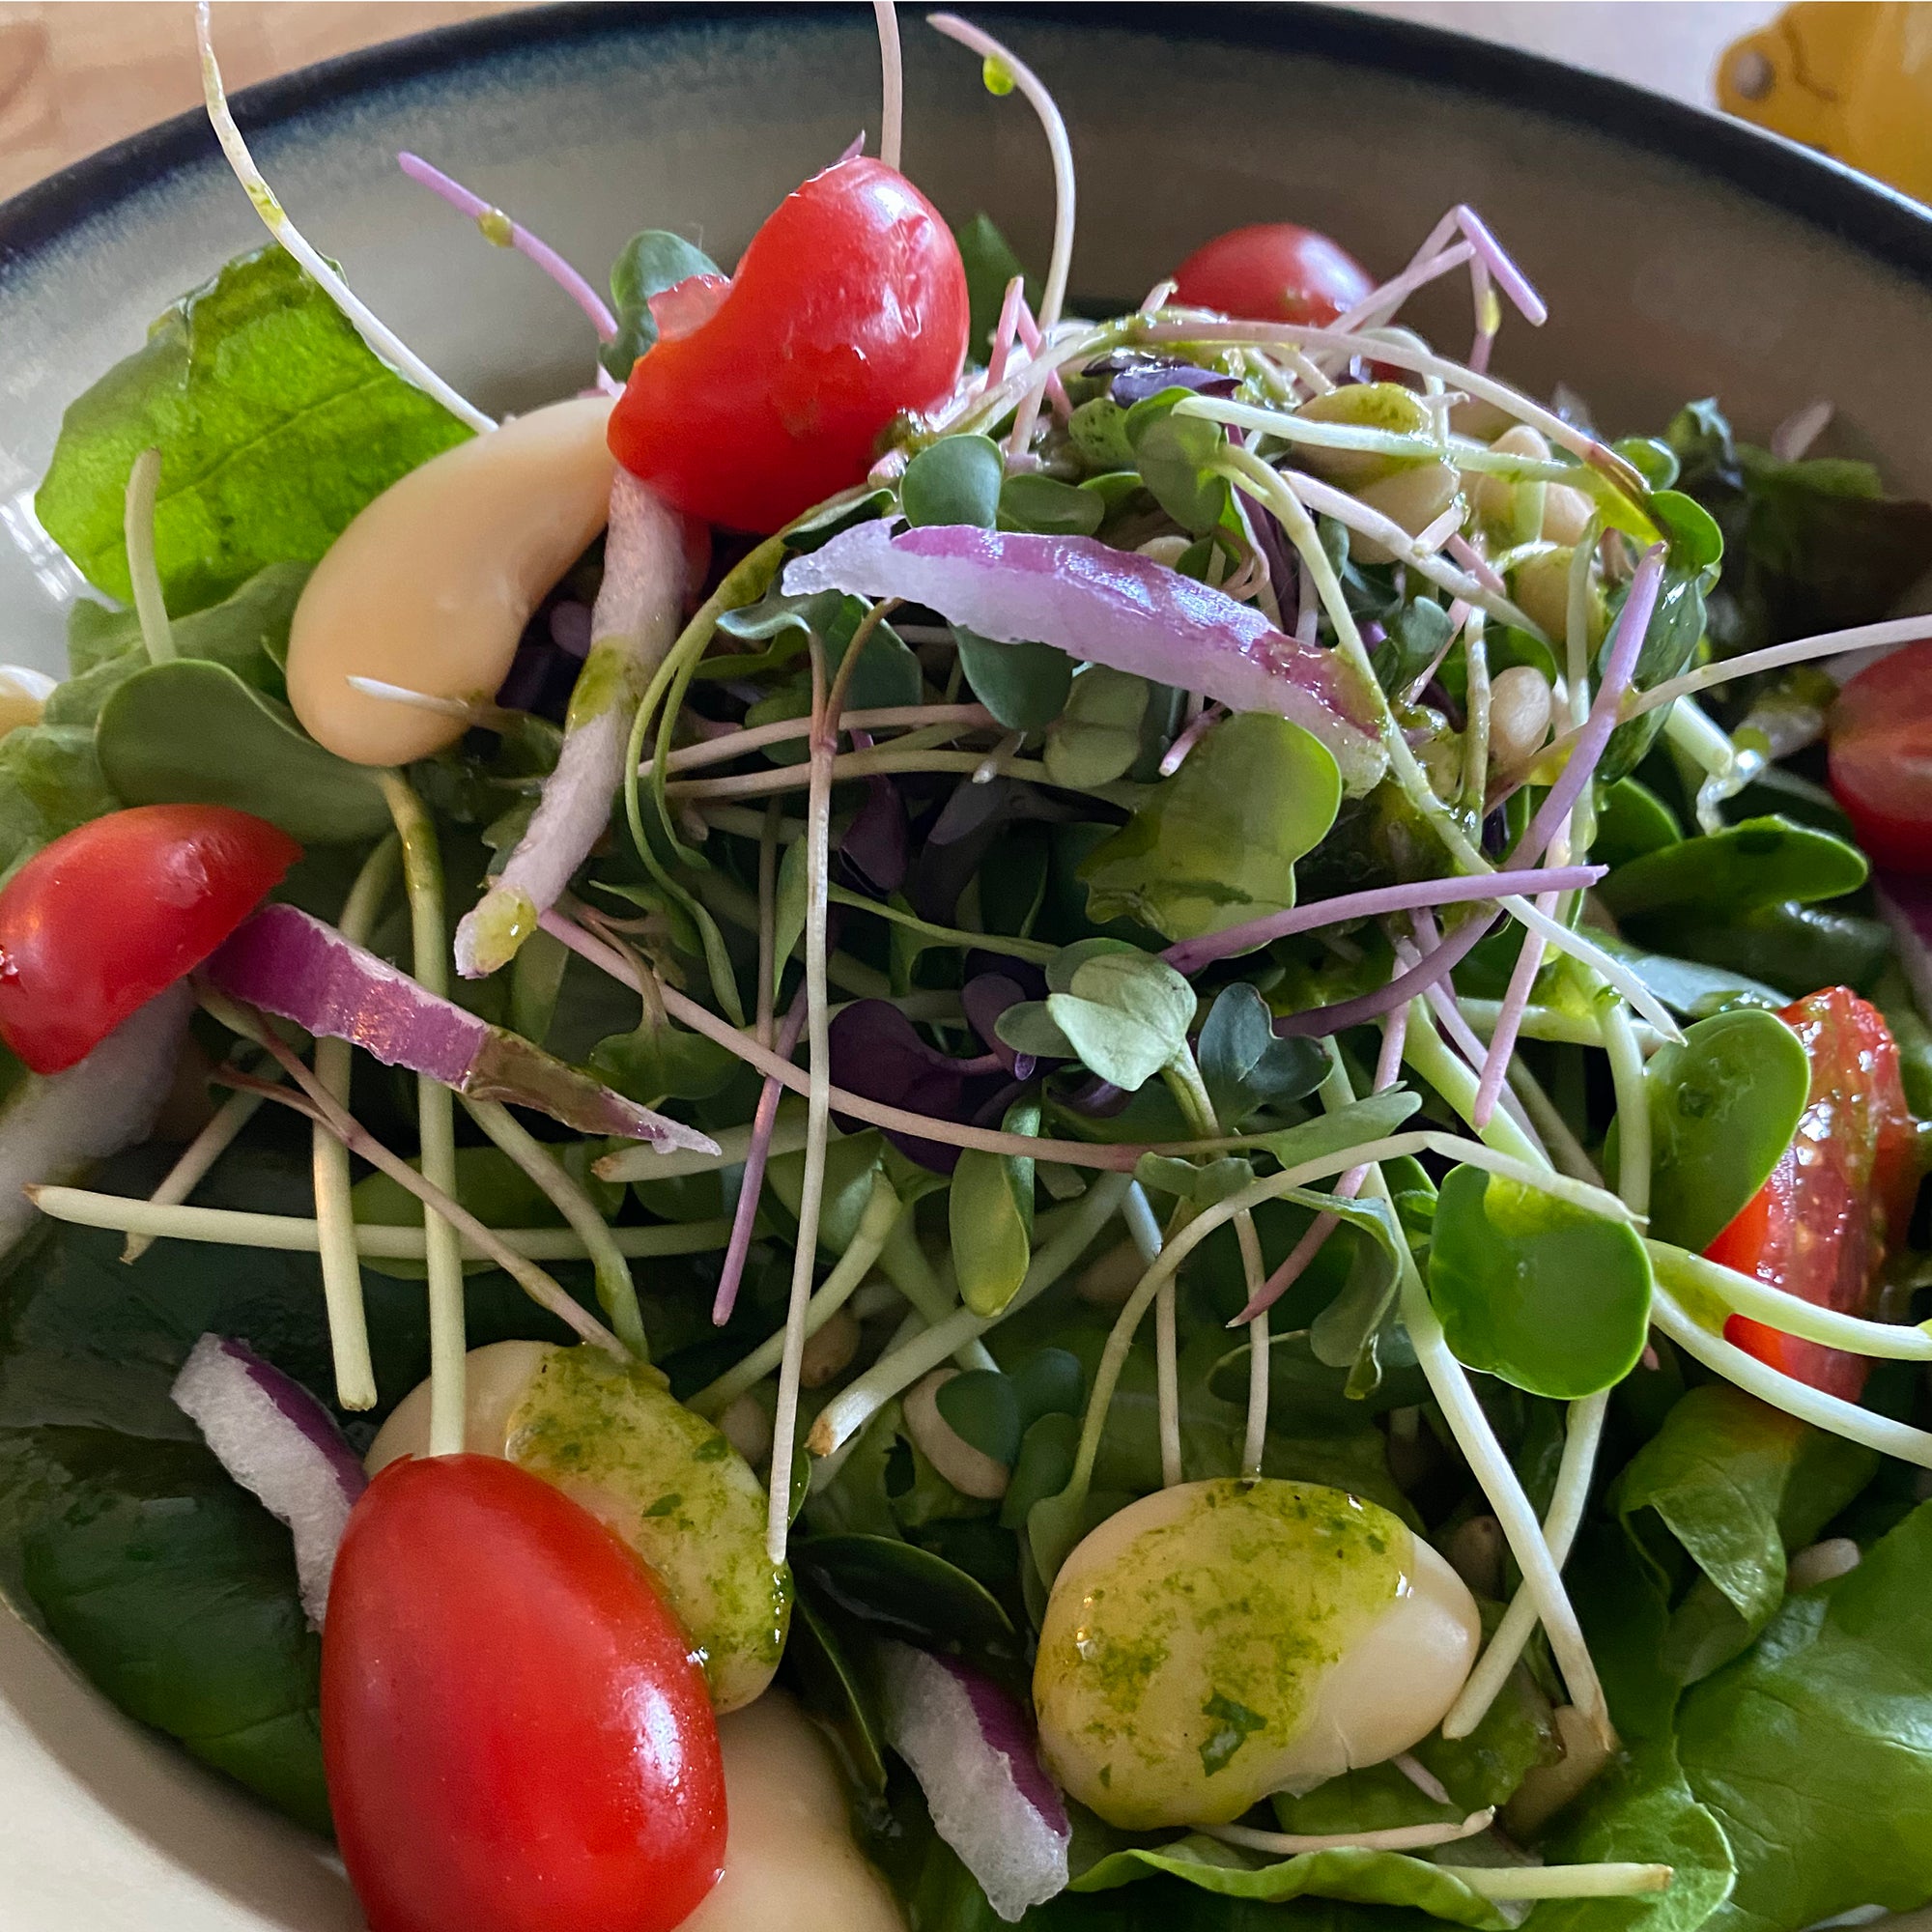 Wispy Greens Salad with Homemade Lemon and Basil Dressing